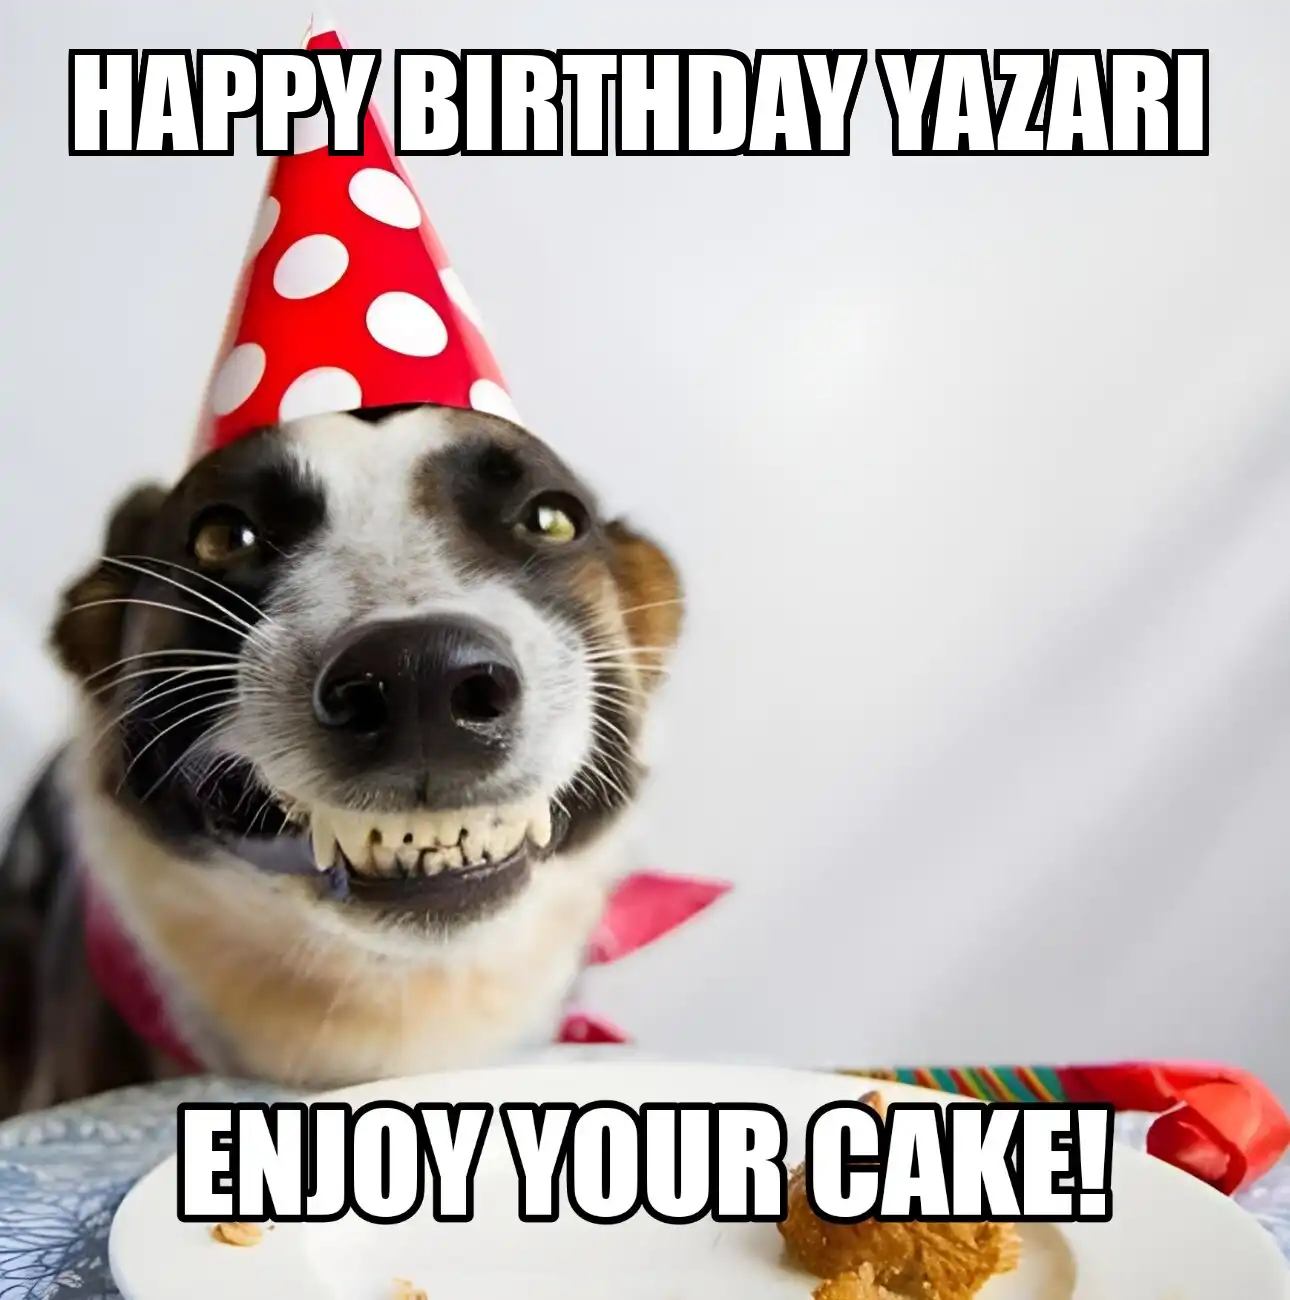 Happy Birthday Yazari Enjoy Your Cake Dog Meme